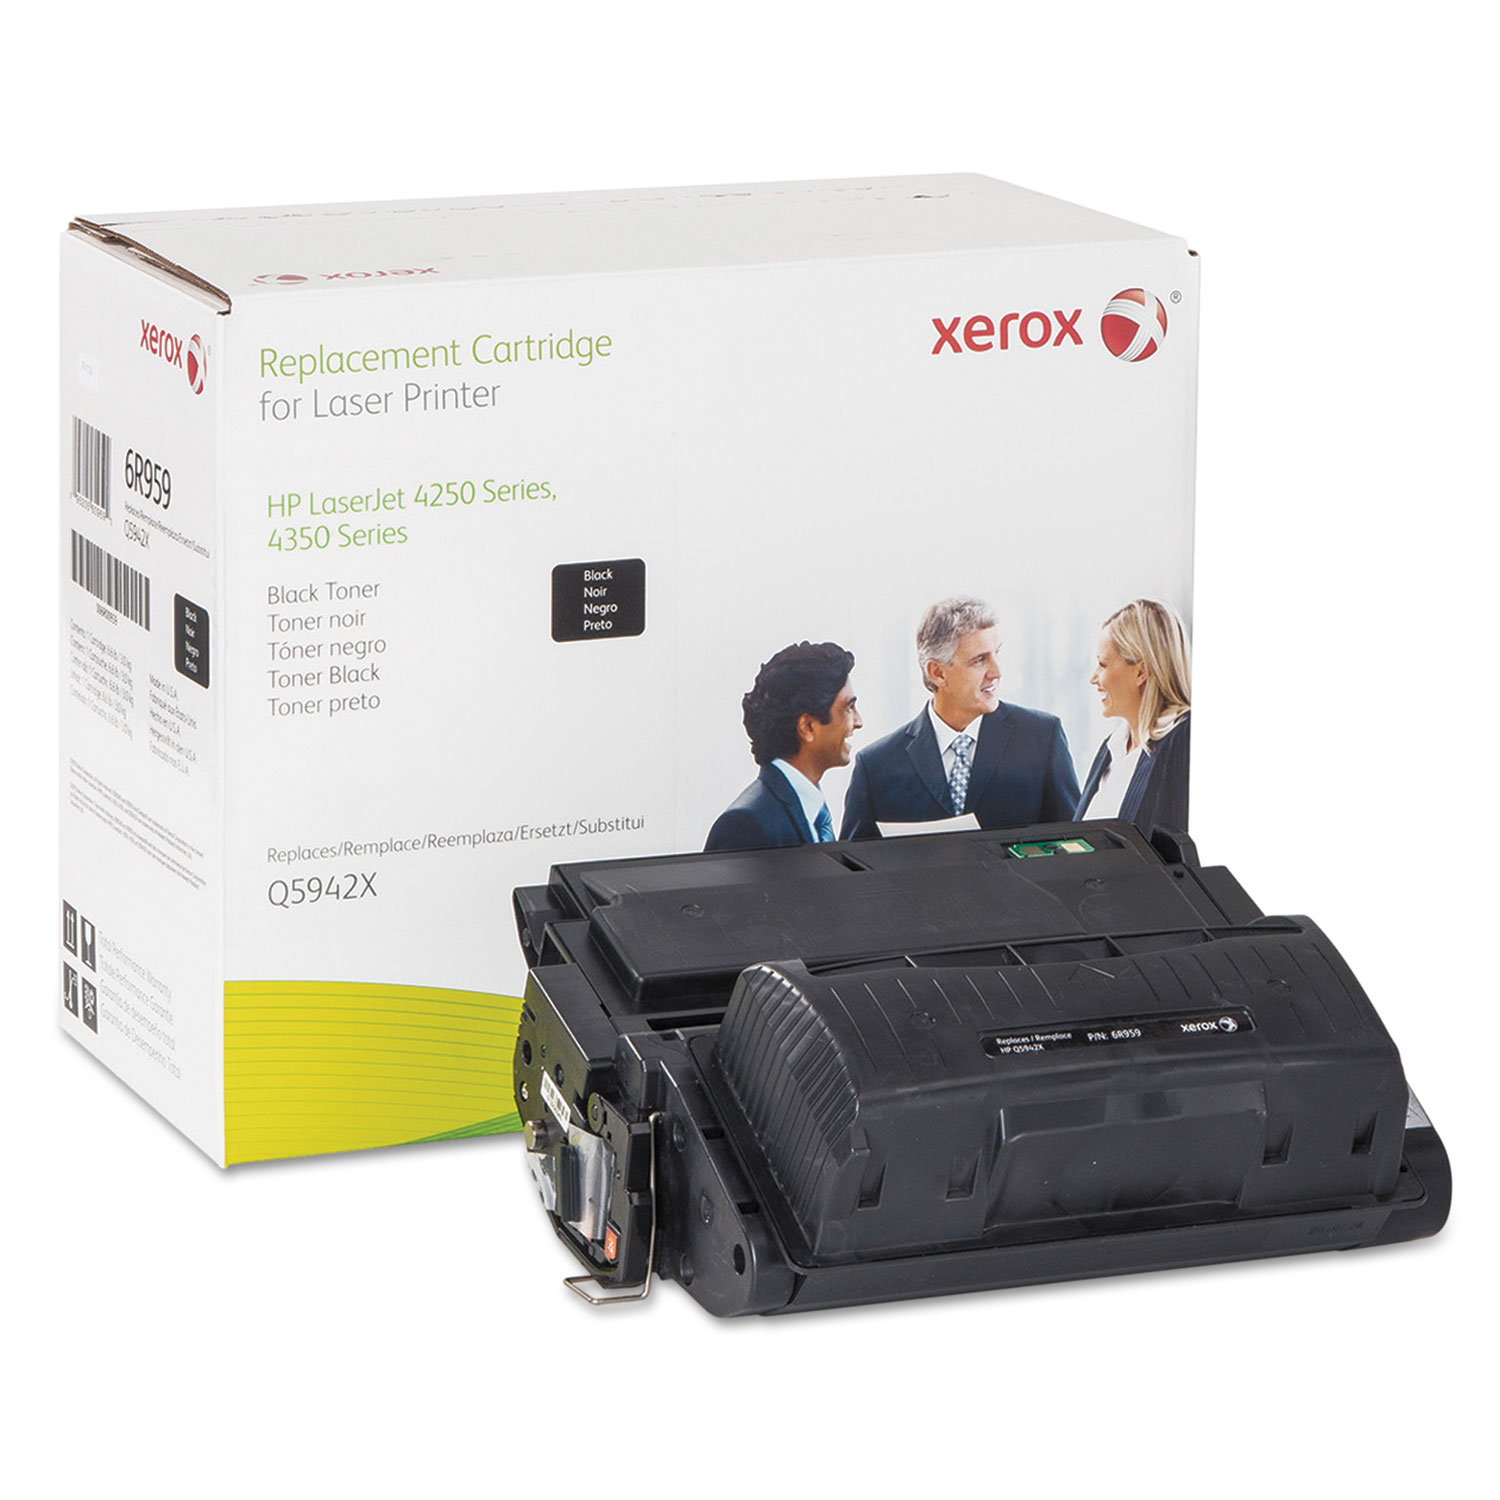  Xerox 006R00959 006R00959 Replacement High-Yield Toner for Q5942X (42X), Black (XER006R00959) 